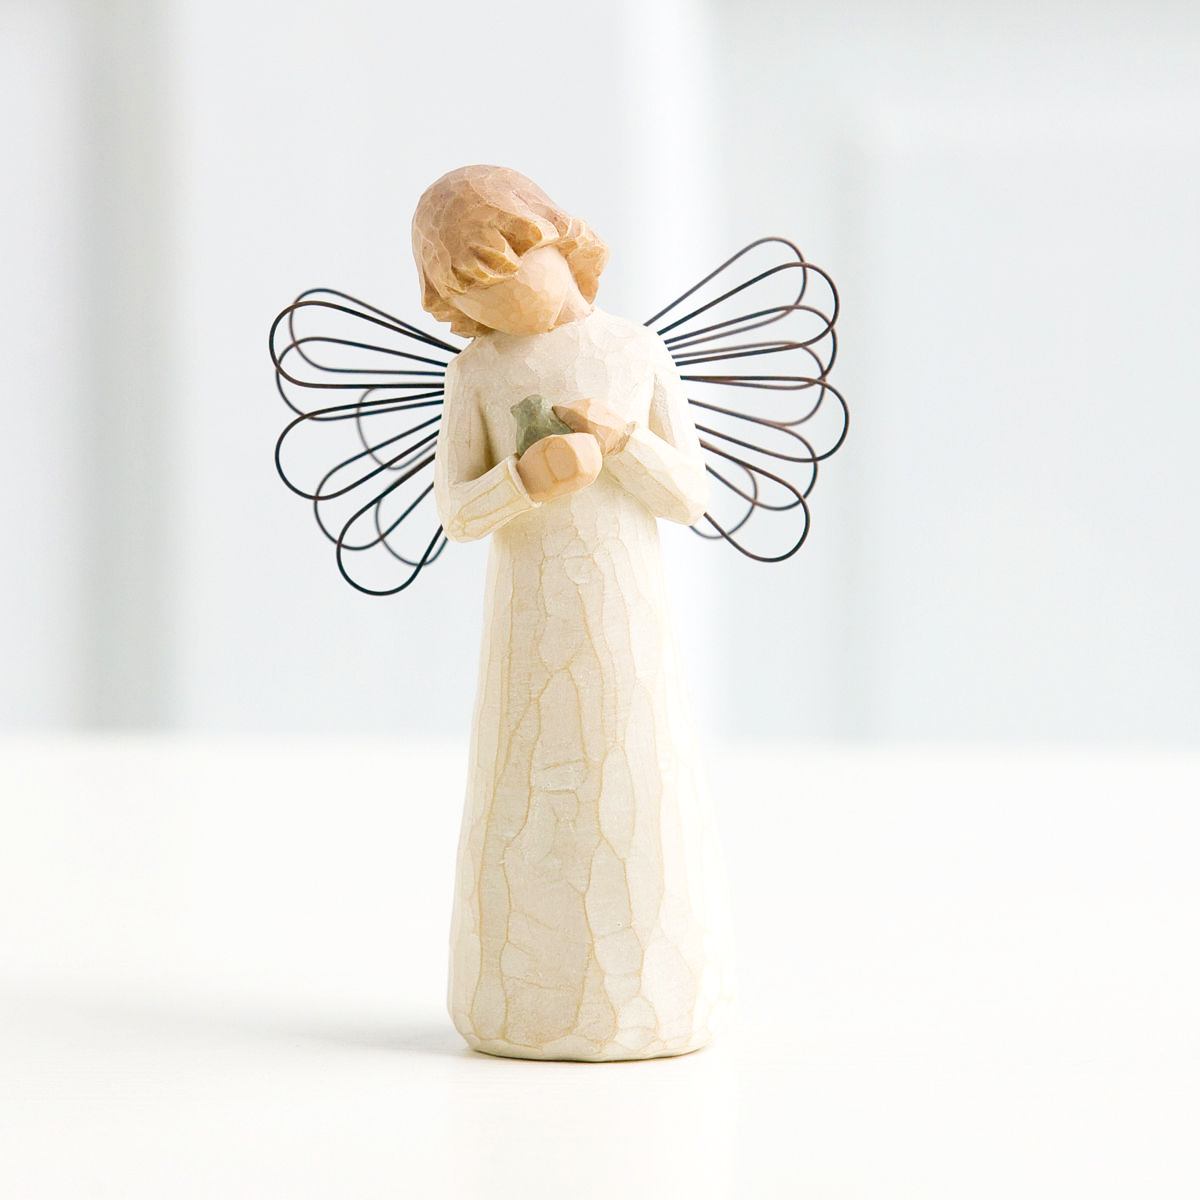 Willow Tree Figurine Angel of hope by Susan Lordi 26235